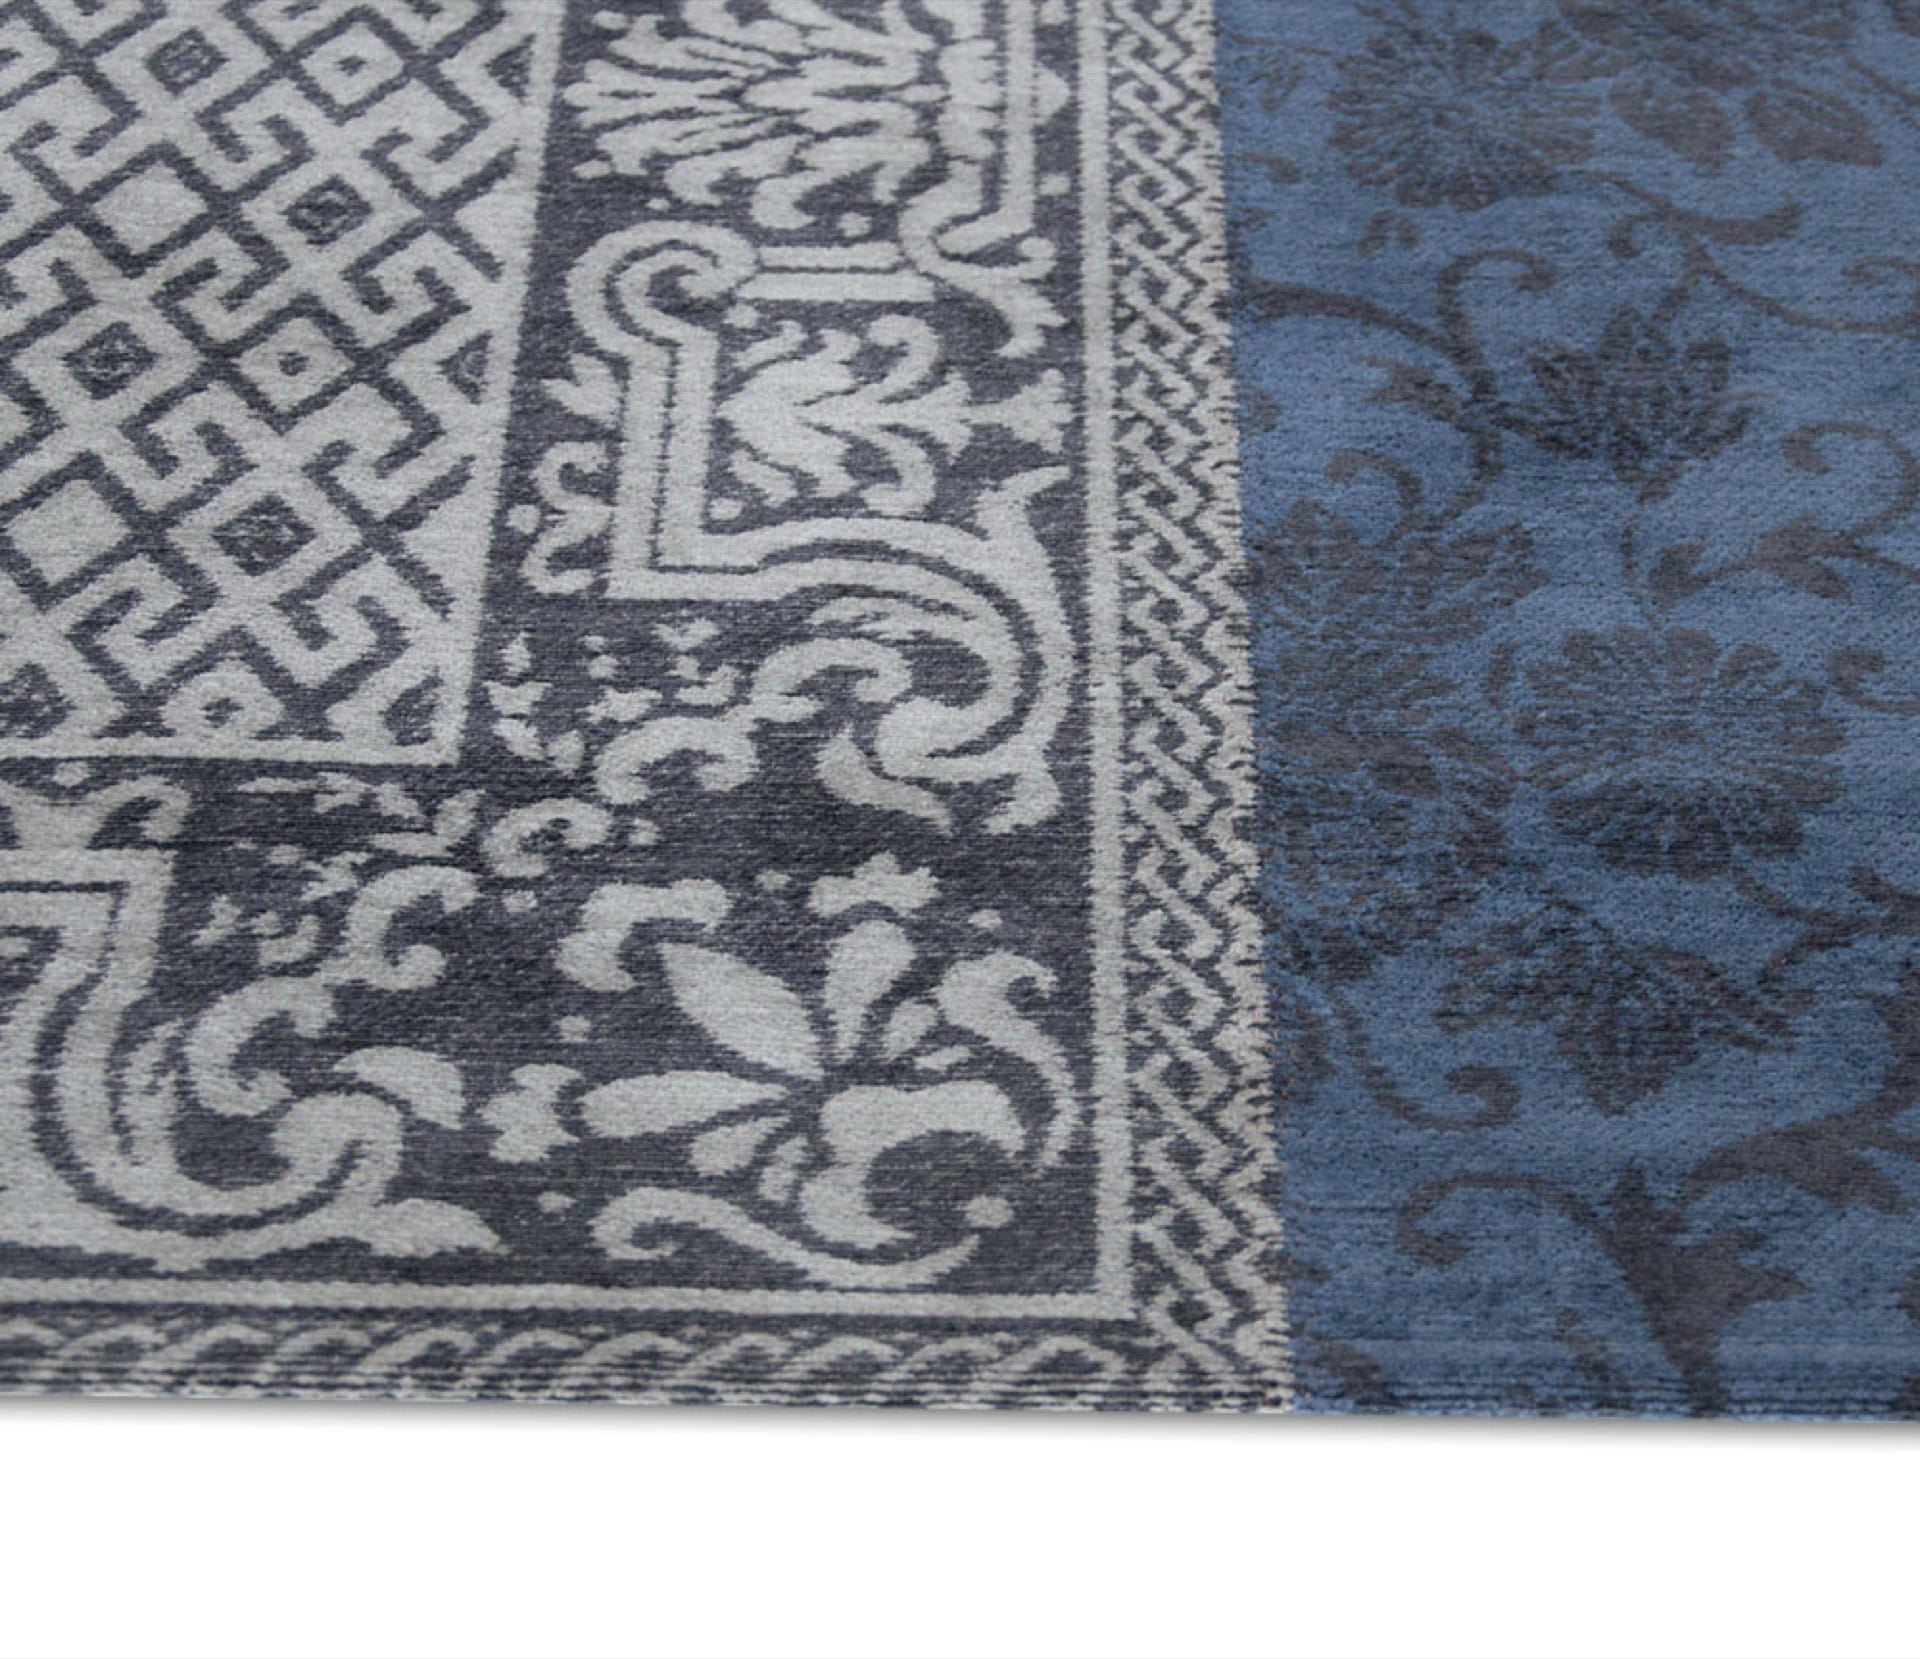 Vintage Collection Multi Blue Denim 8108 rug by Louis De Poortere